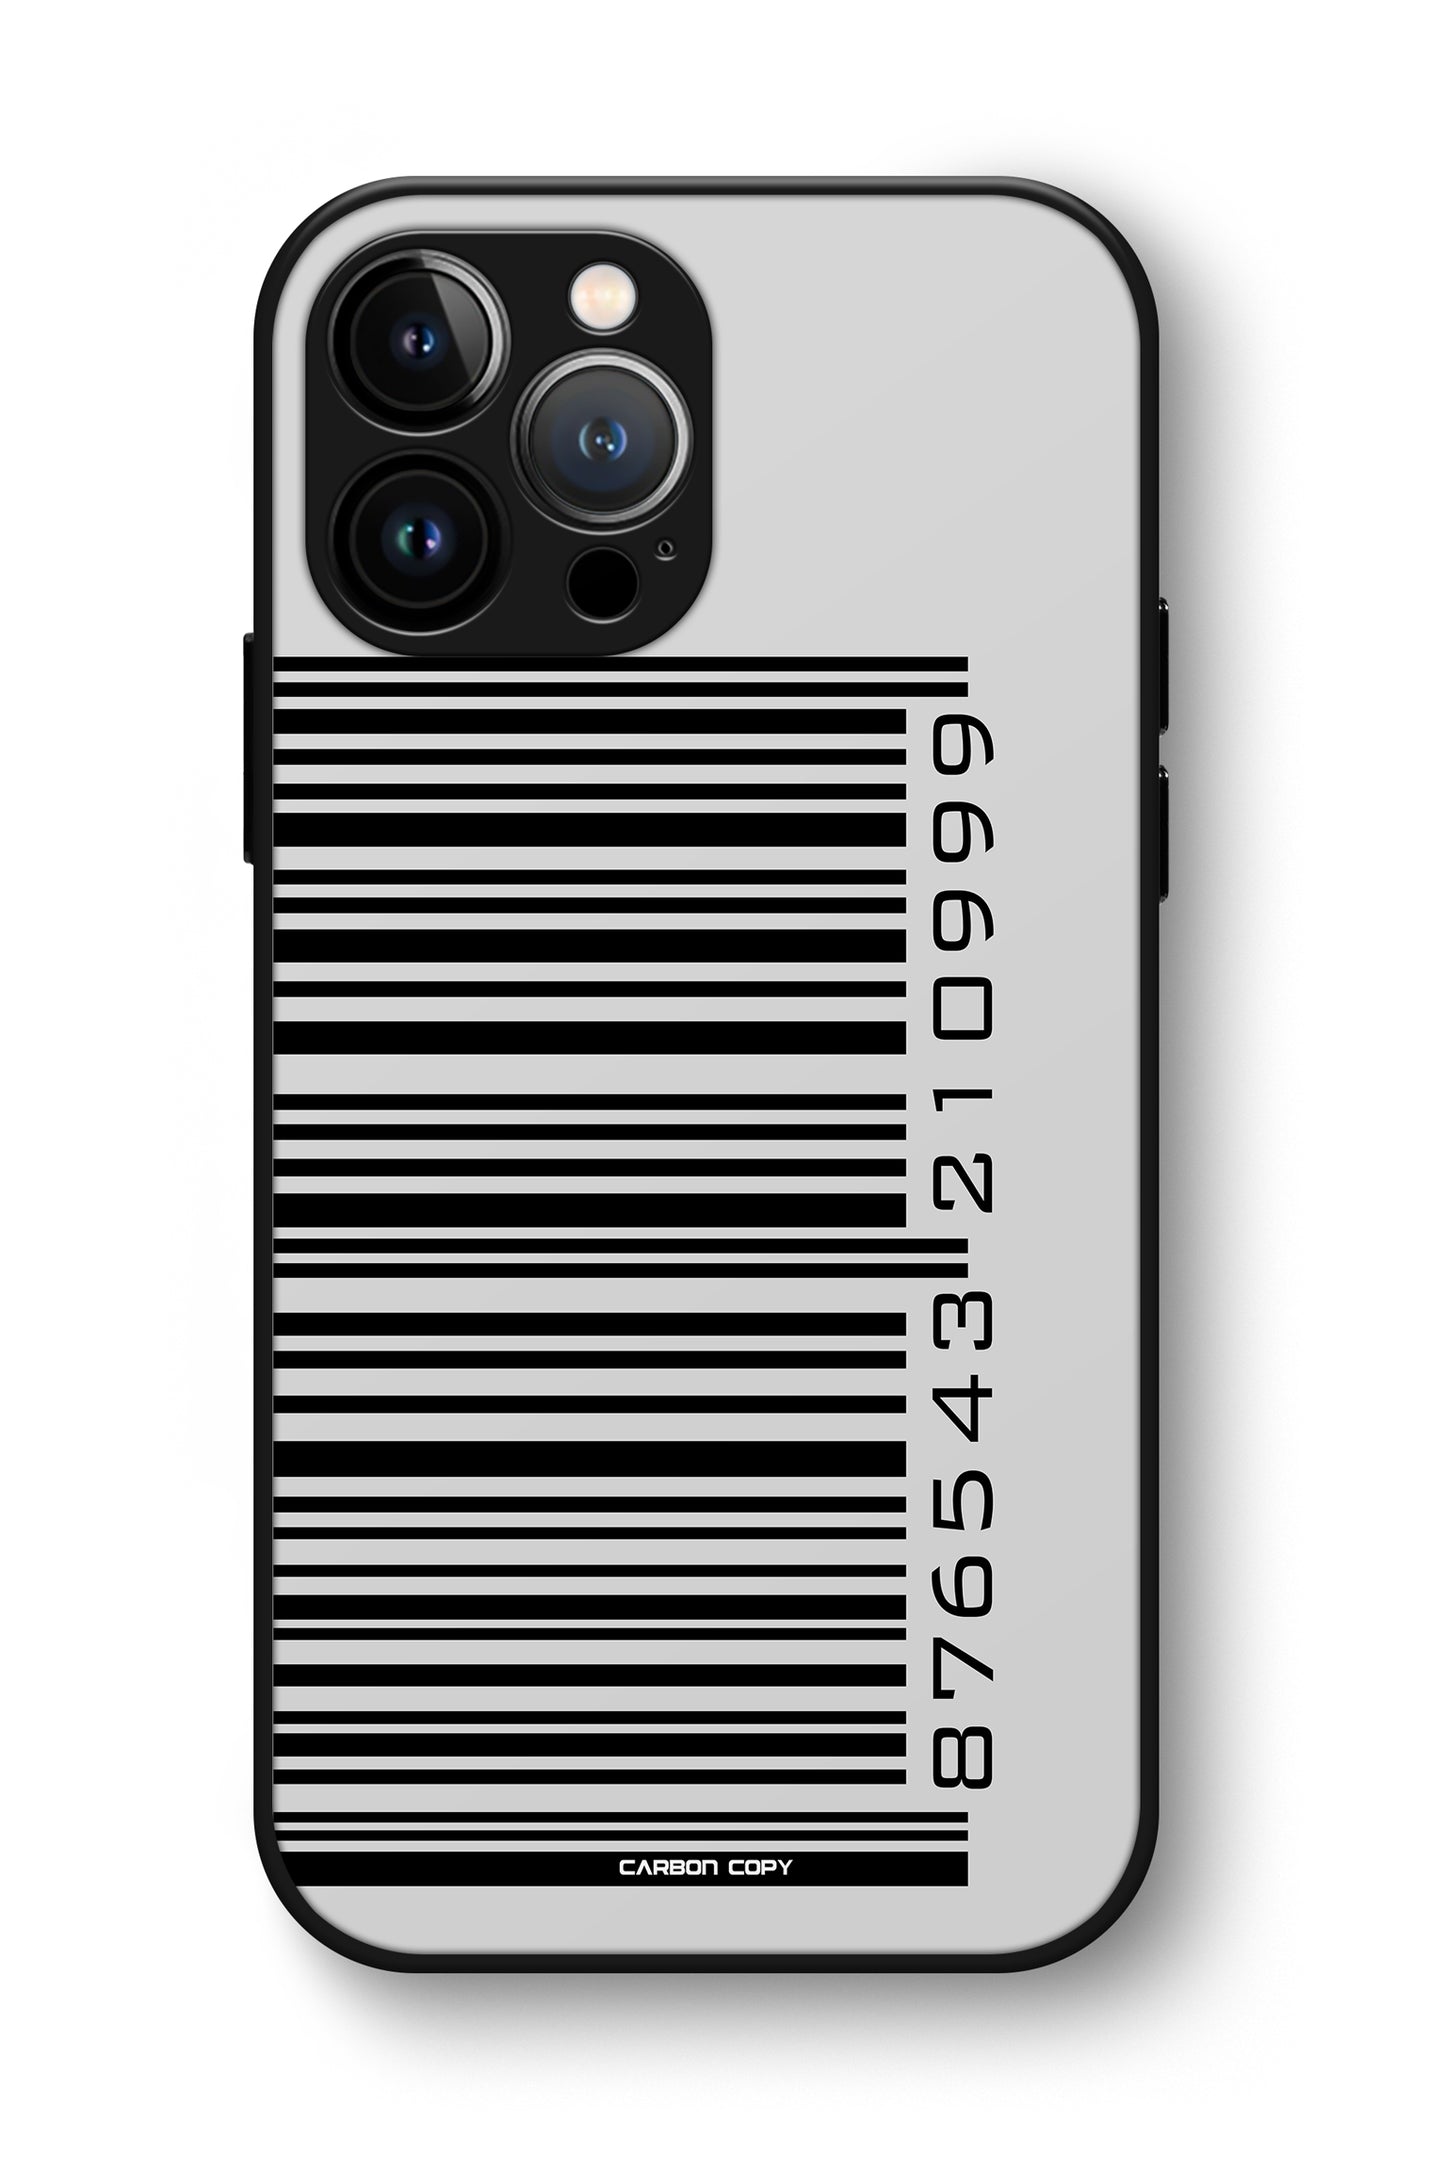 Barcode Premium Phone Glass Case